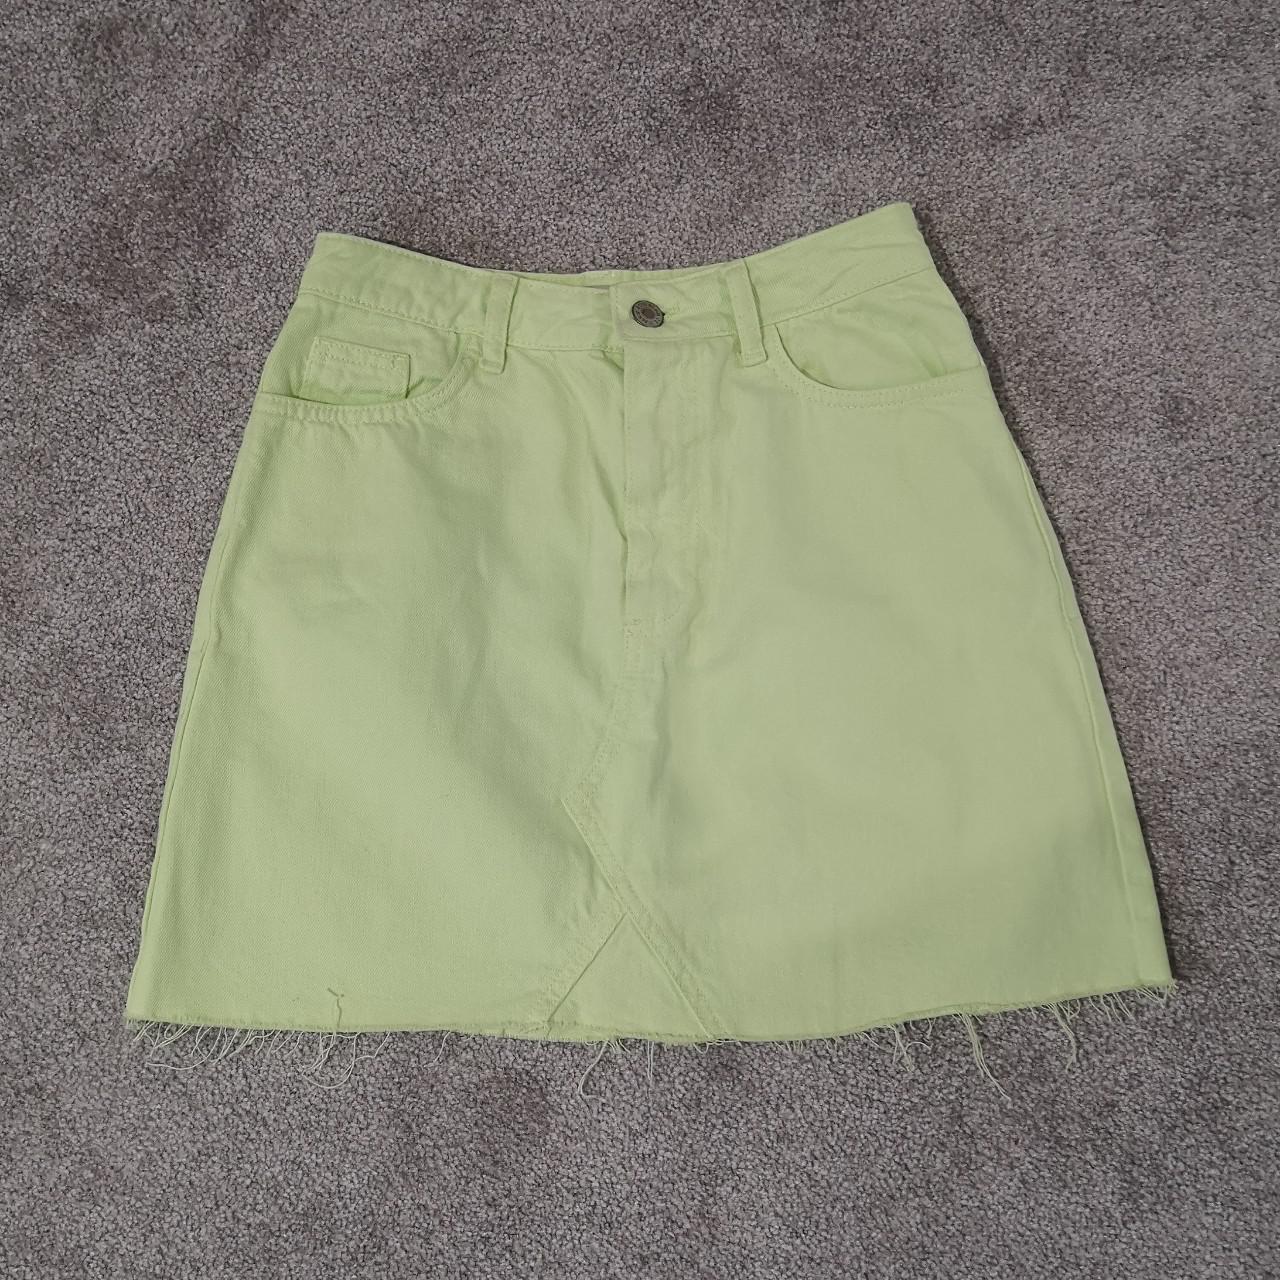 Primark Women's Green Skirt | Depop